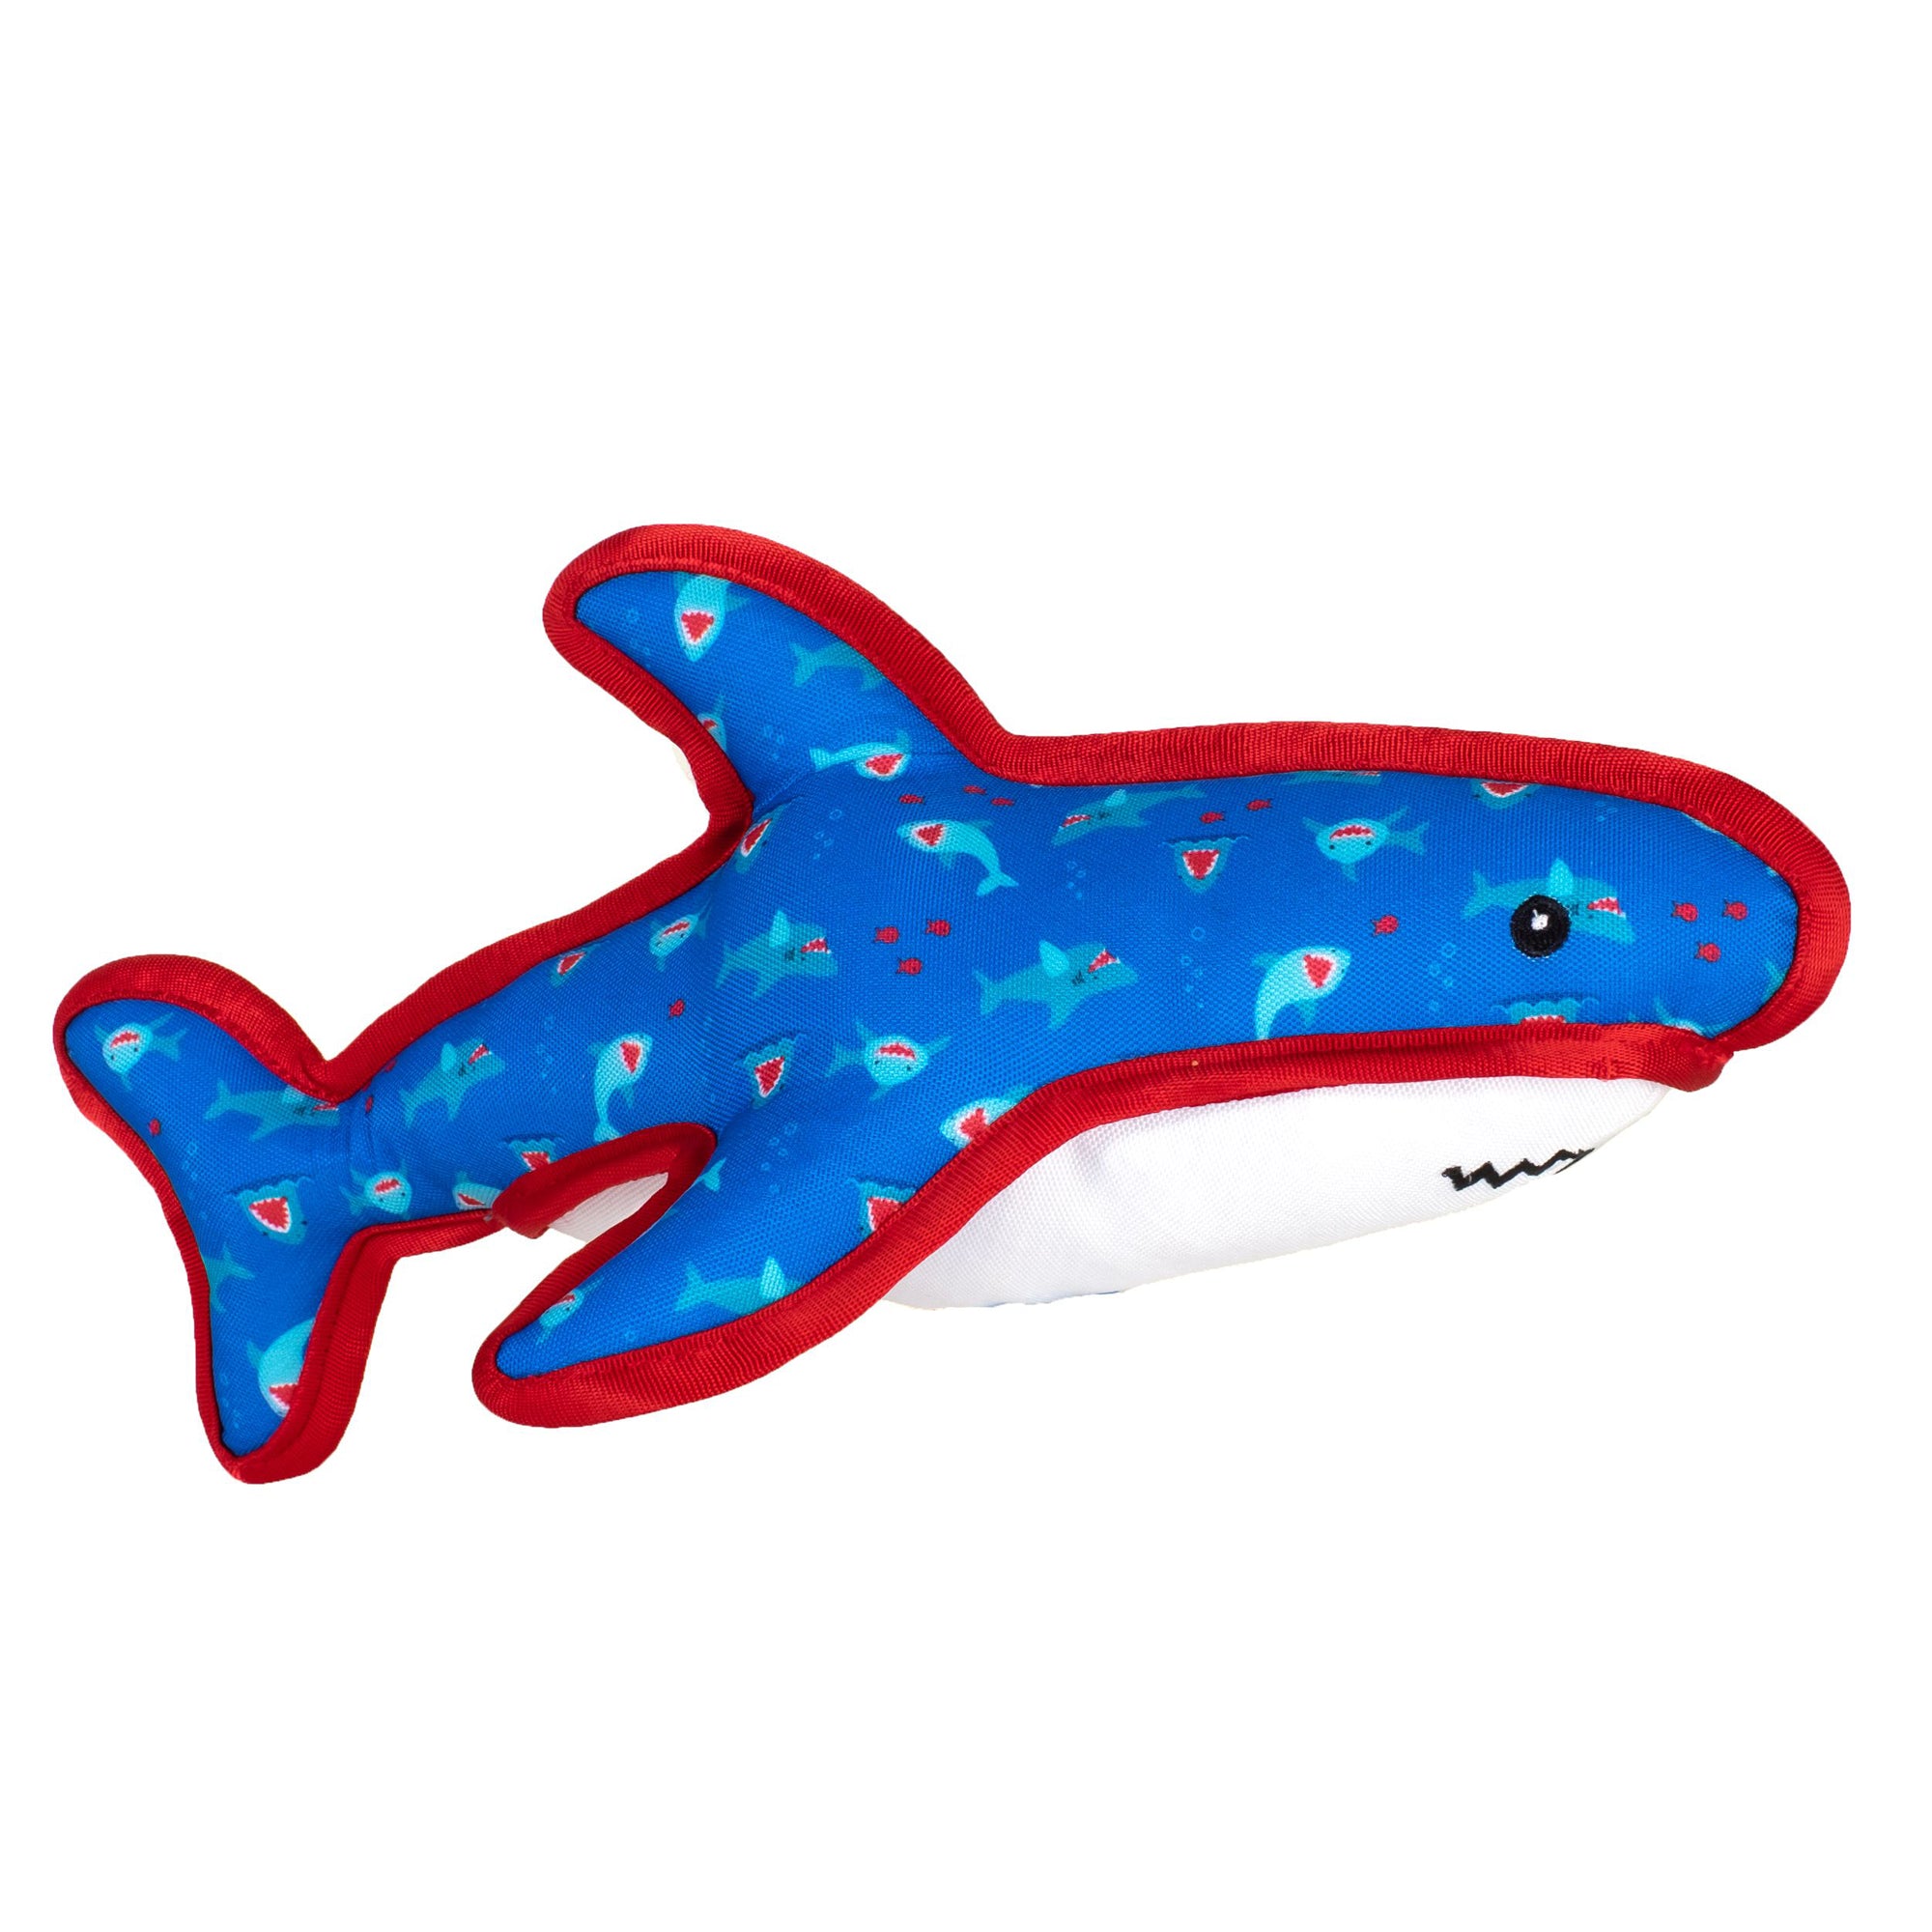 The Worthy Dog Chomp Shark Dog Toy